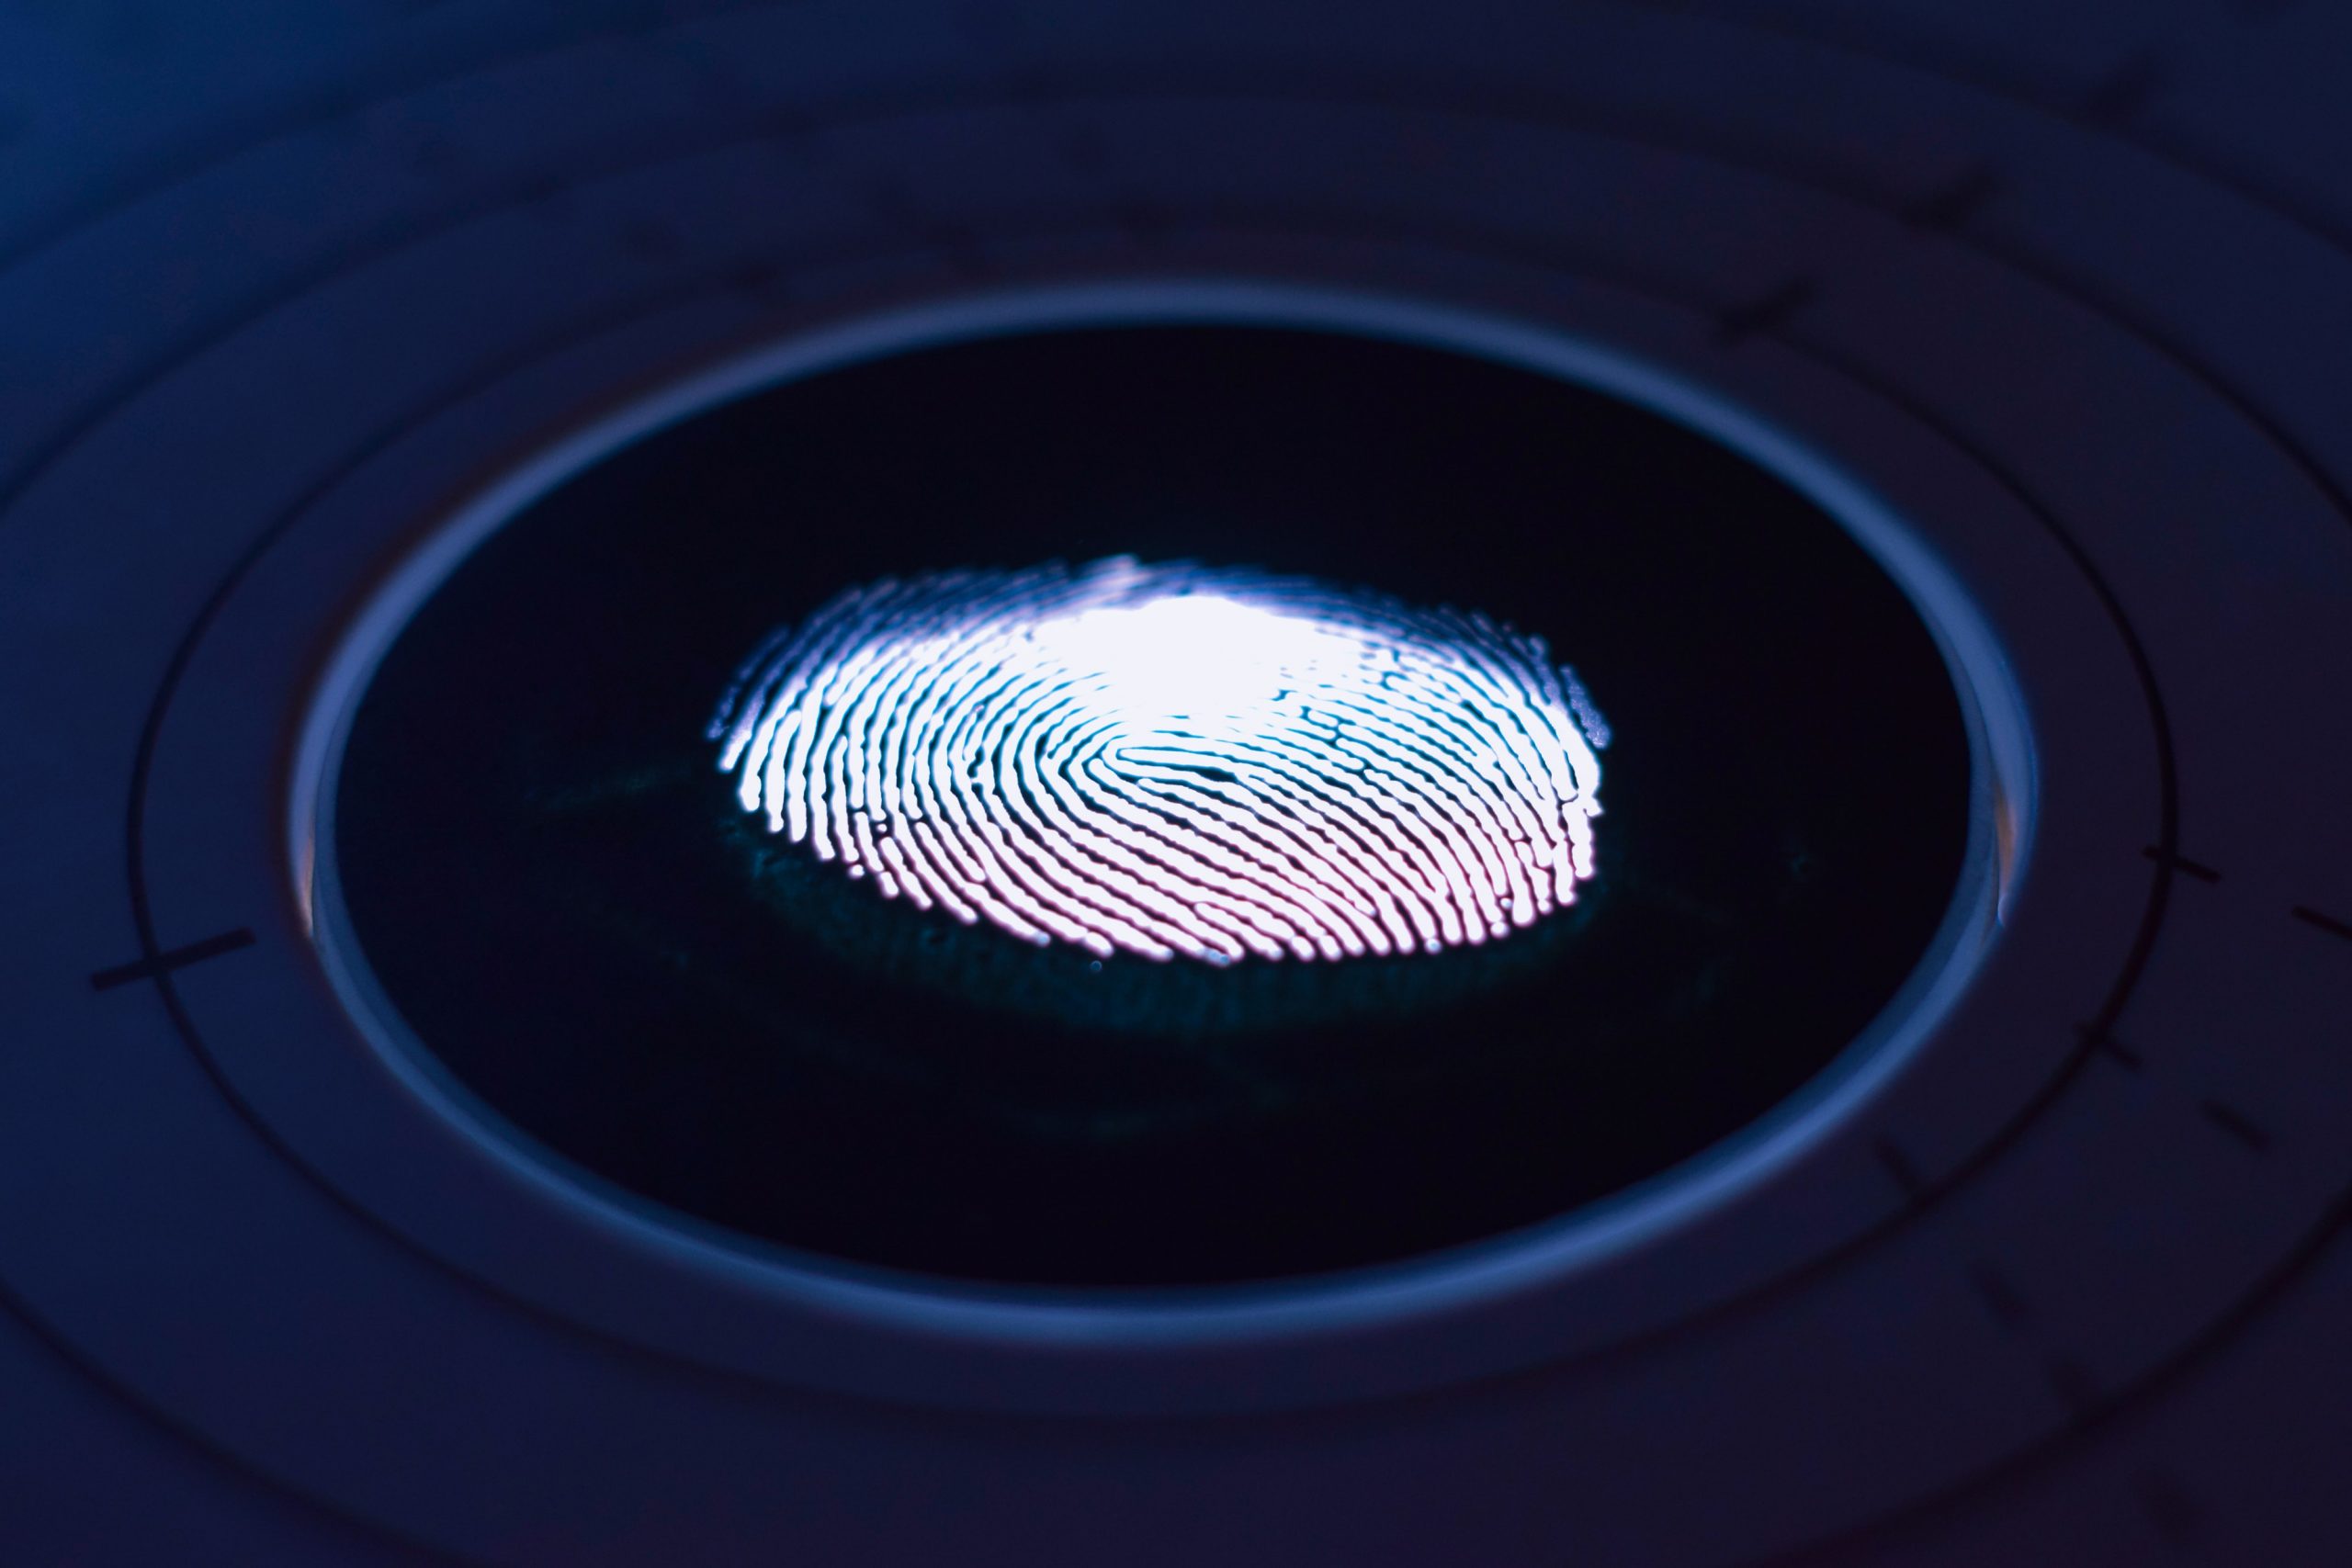 fake fingerprints unlock devices